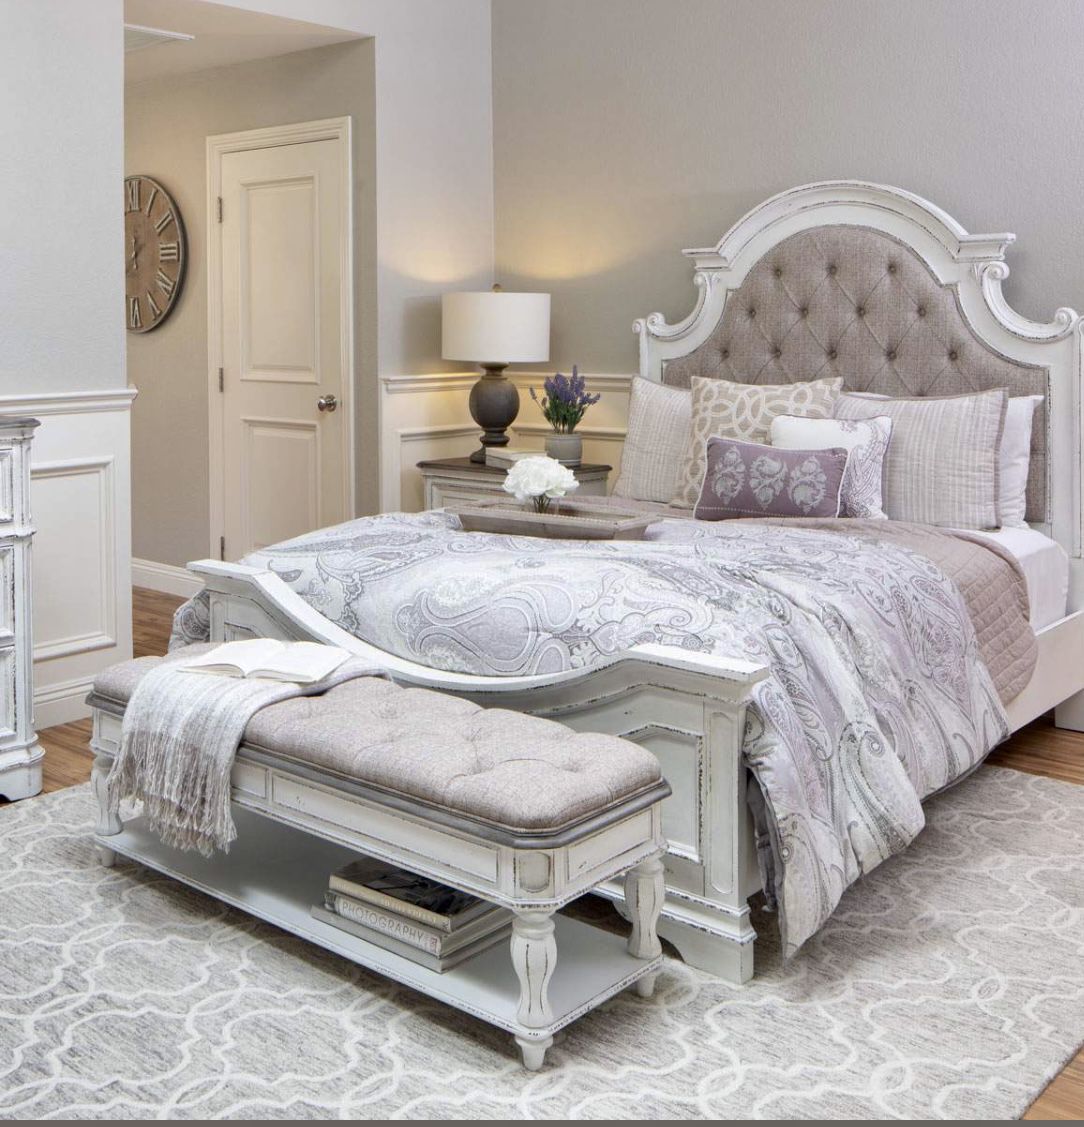 Cal King Rustic Bedroom Set including Bed, Nightstands, Dresser, Vanity and mirror/stool